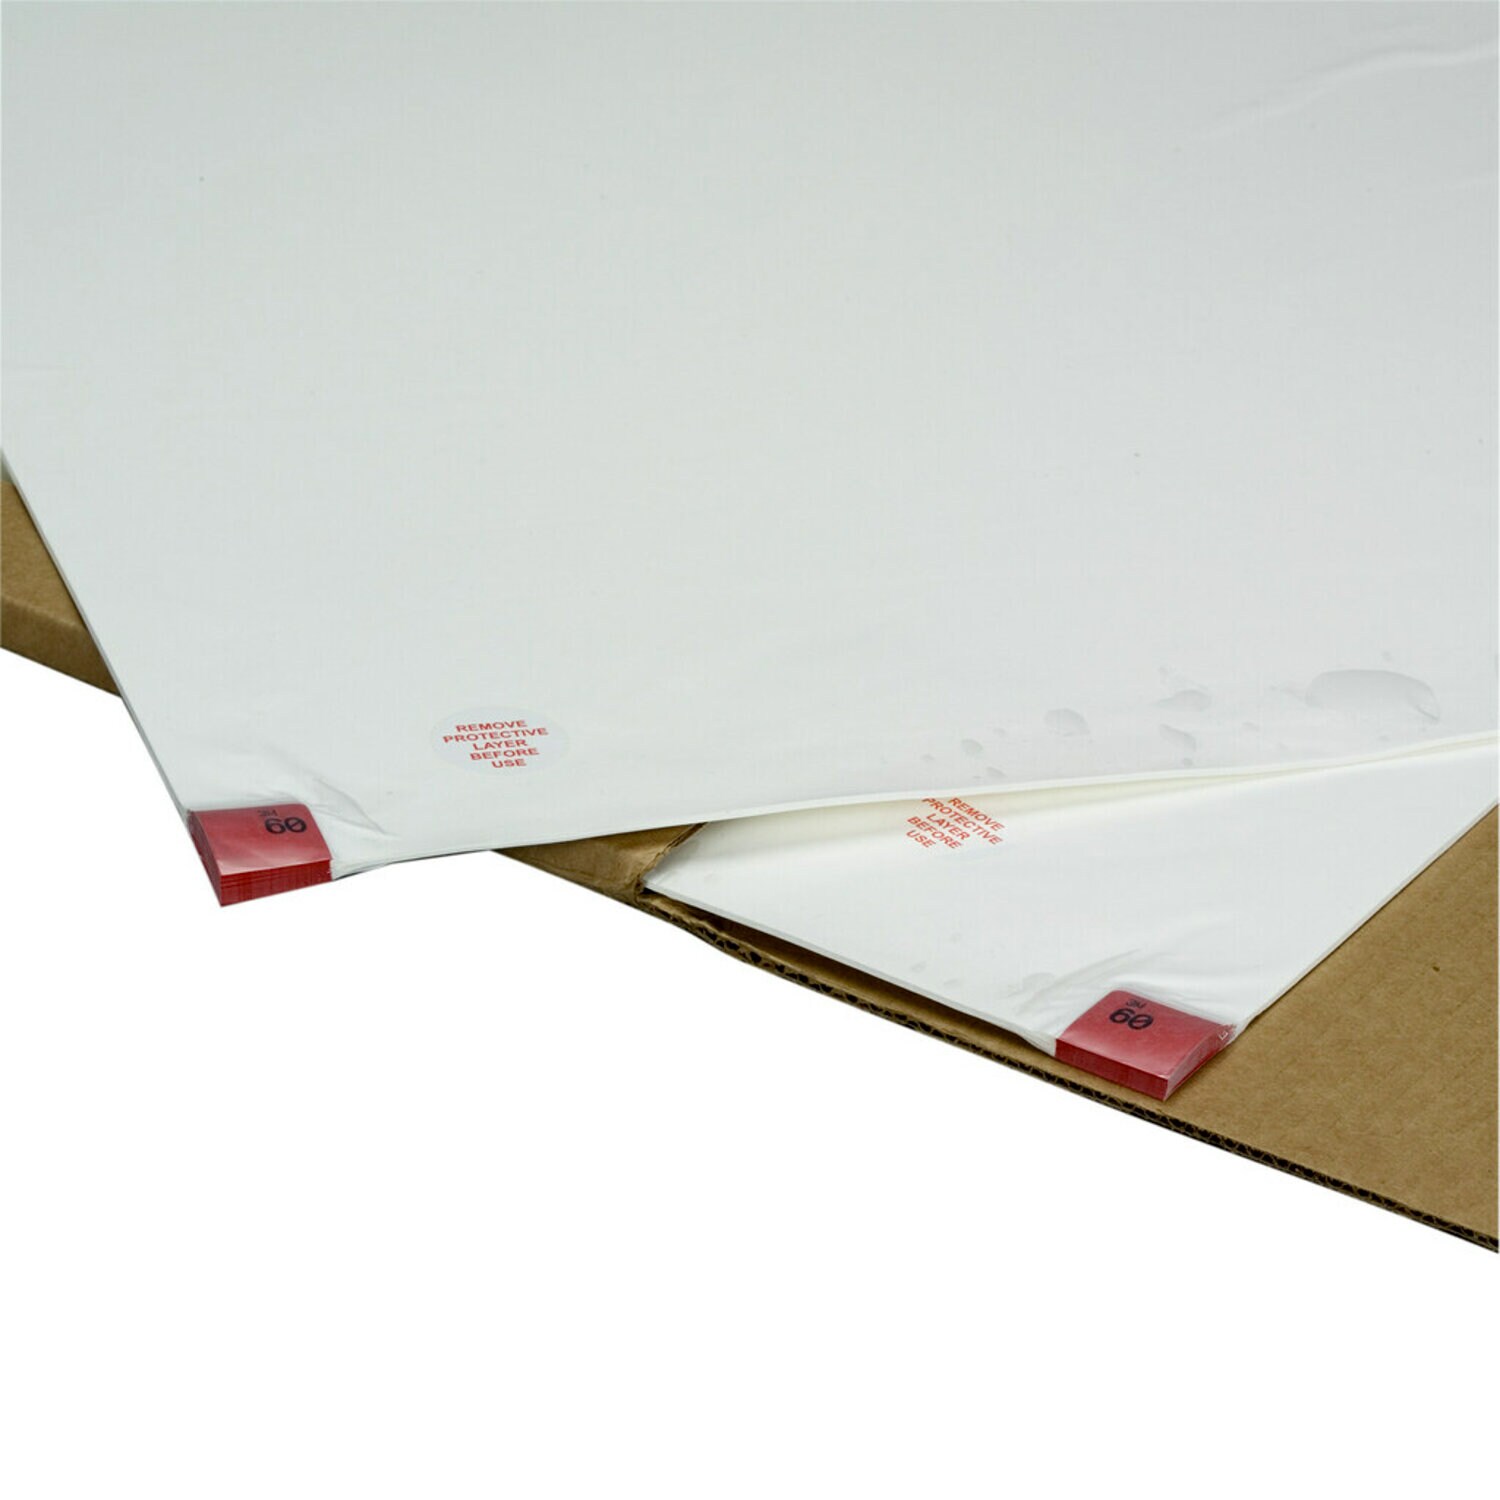 7010375692 - 3M Clean-Walk Replacement Pad 5842, White, 30 in x 24 in, 60 Sheets Per
Pad, 2 Pads Per Case